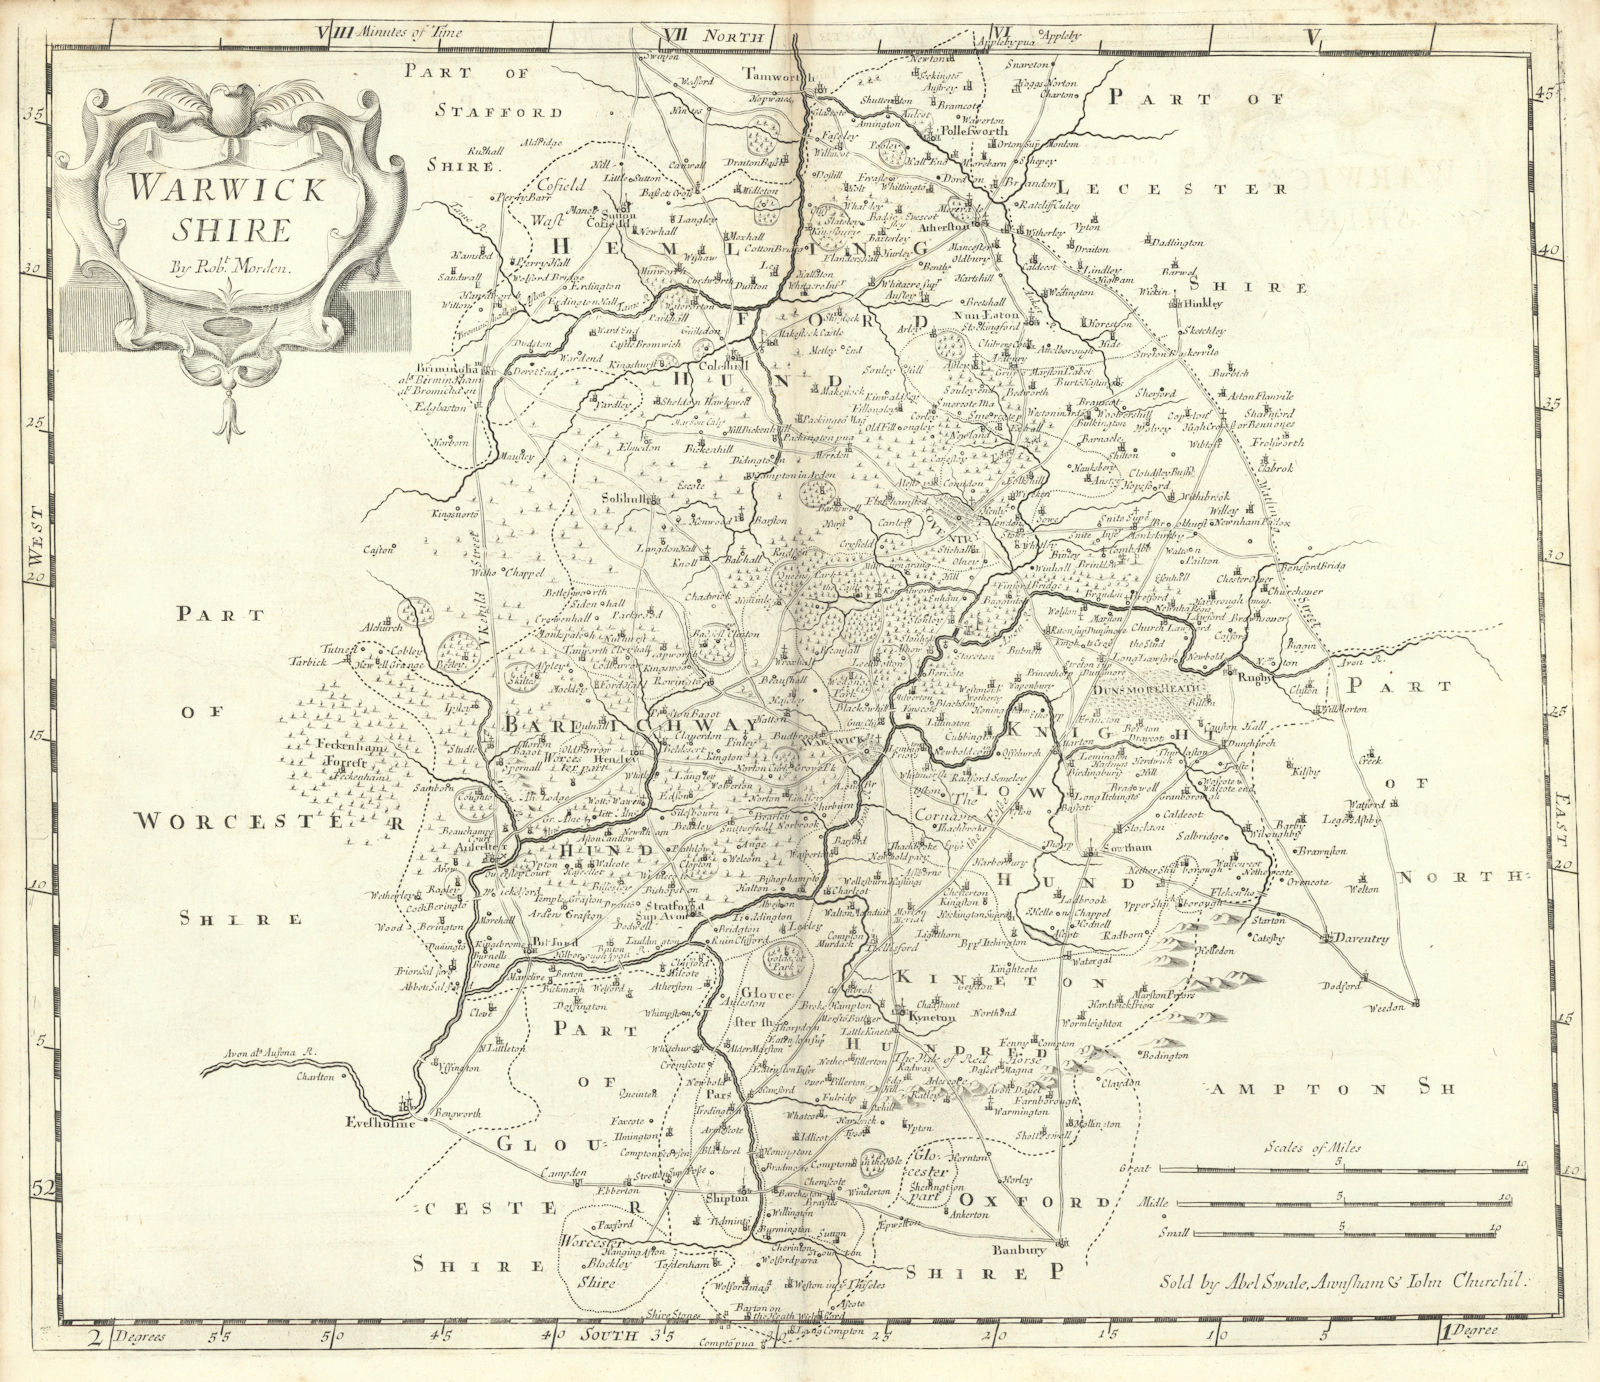 Associate Product Warwickshire. 'WARWICK SHIRE' by ROBERT MORDEN from Camden's Britannia 1722 map